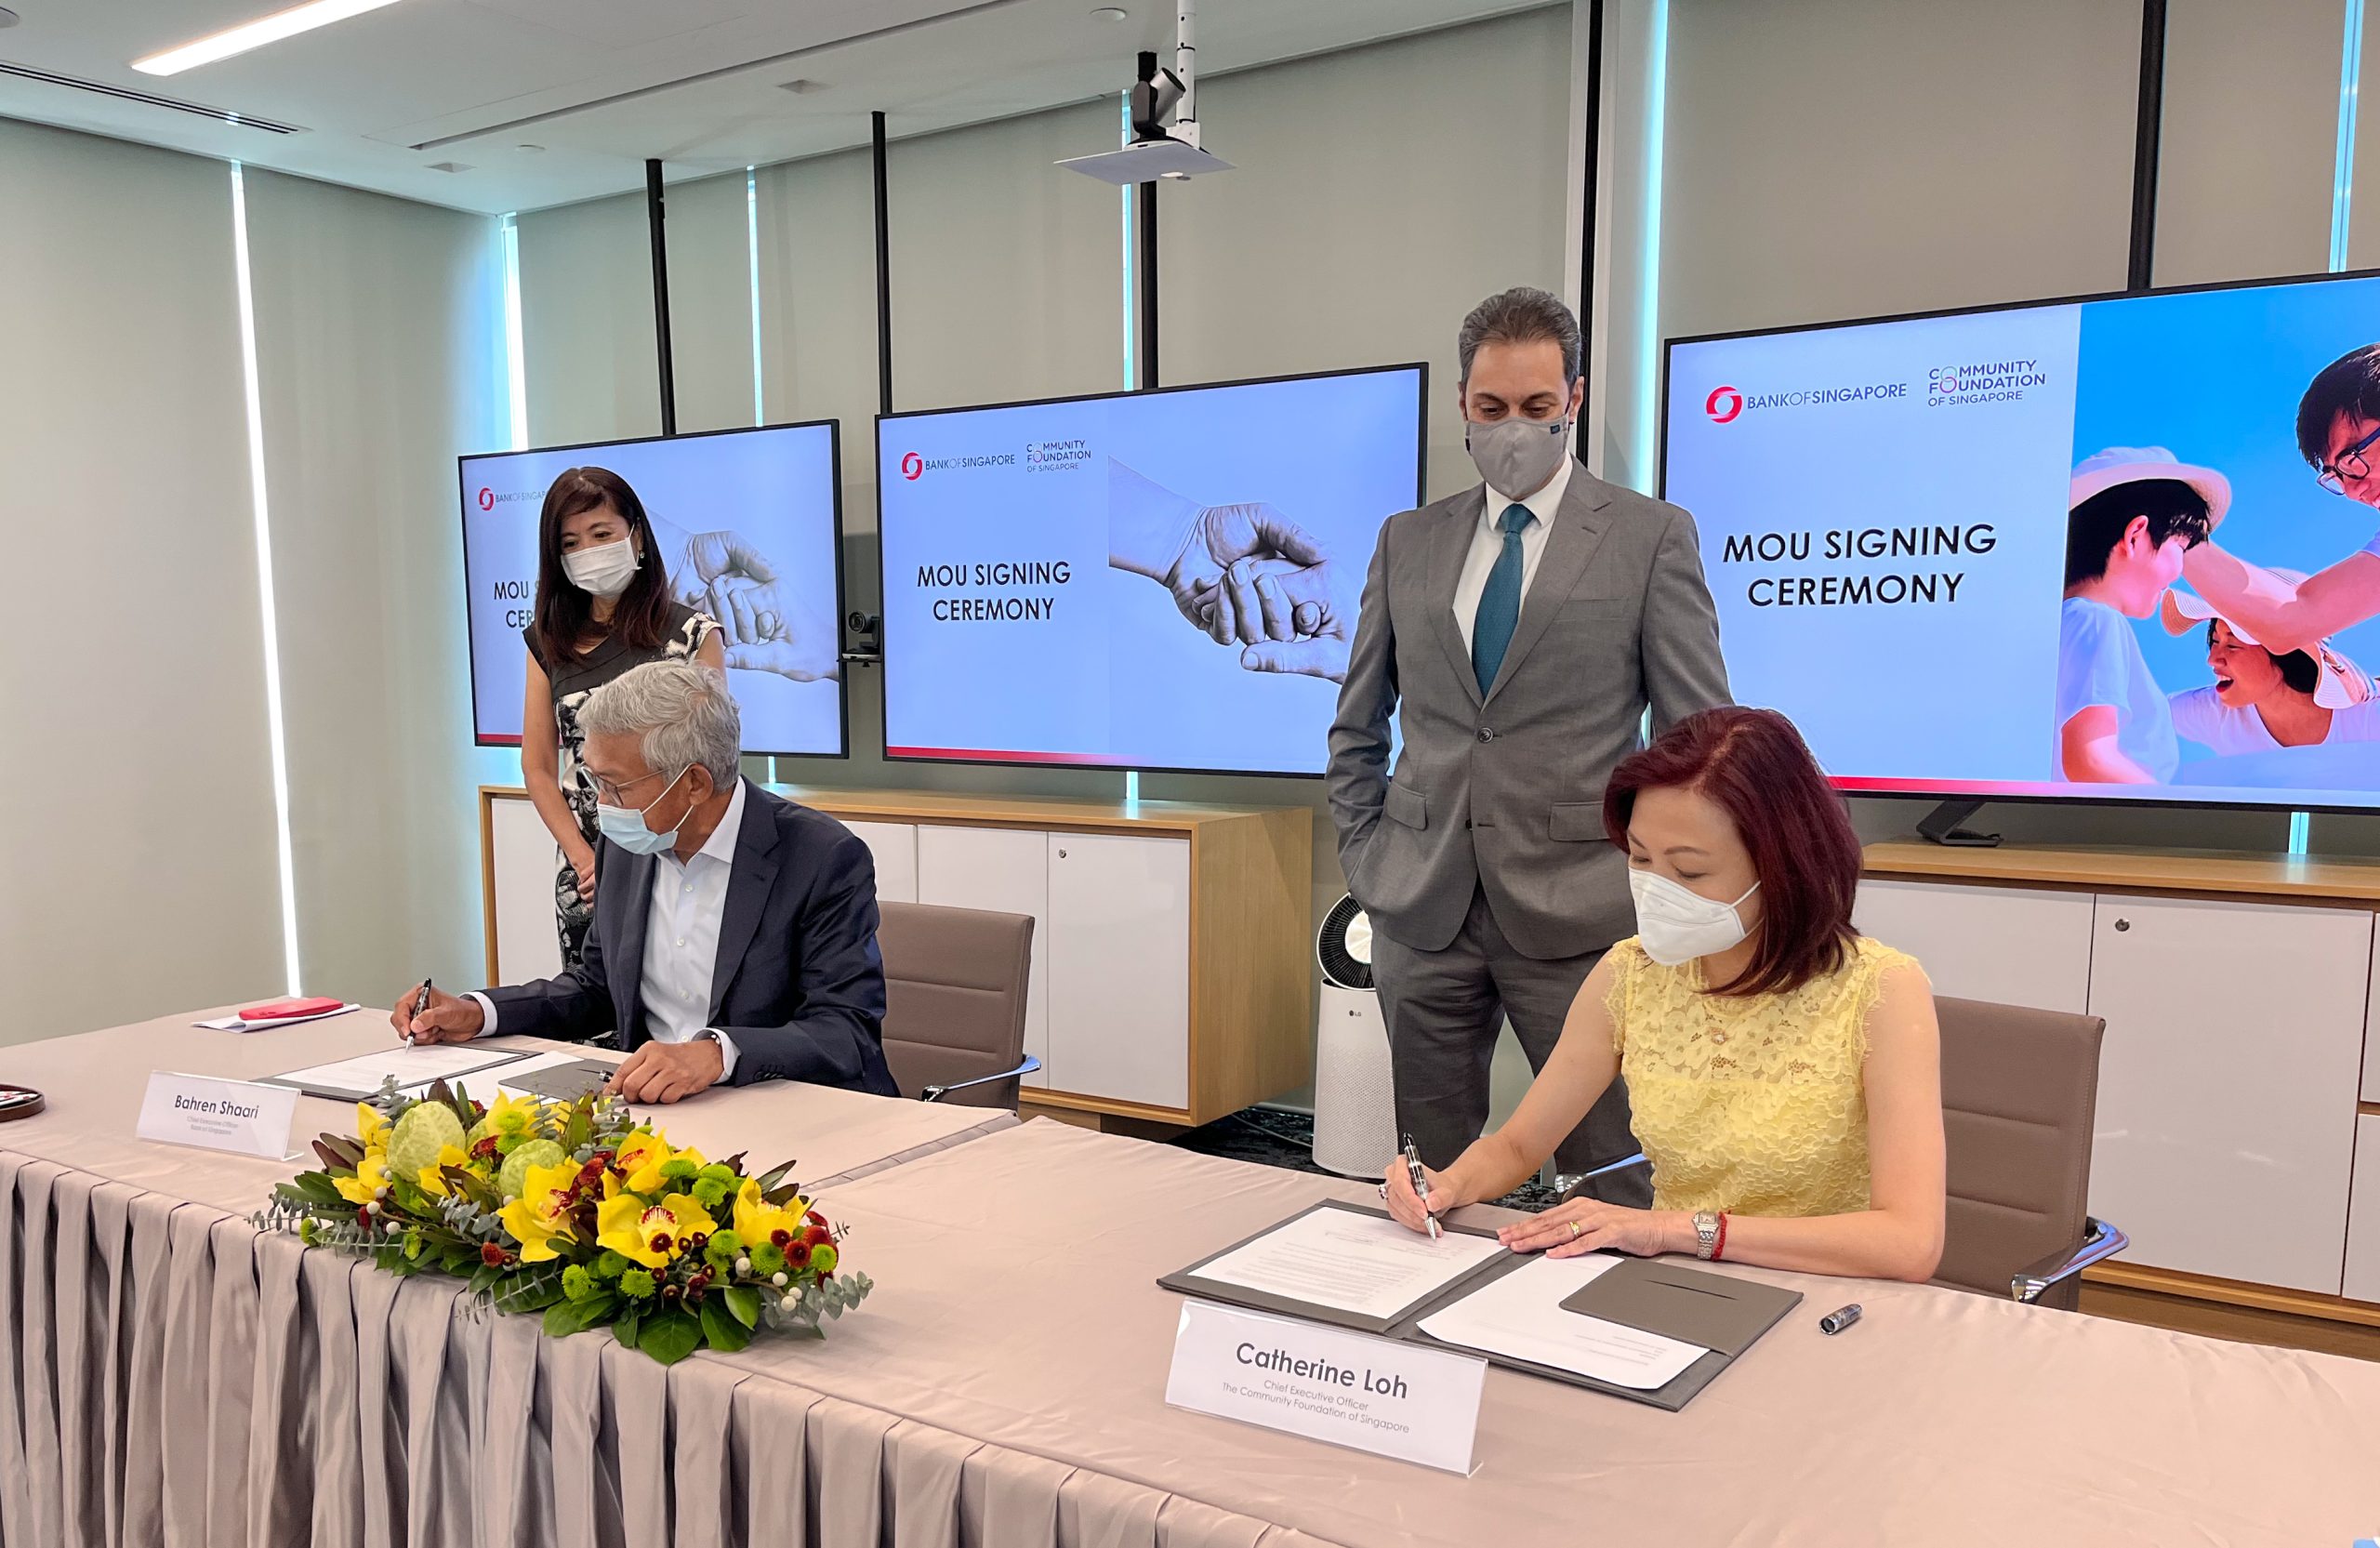 cfs and bank of singapore memorandum signing ceremony